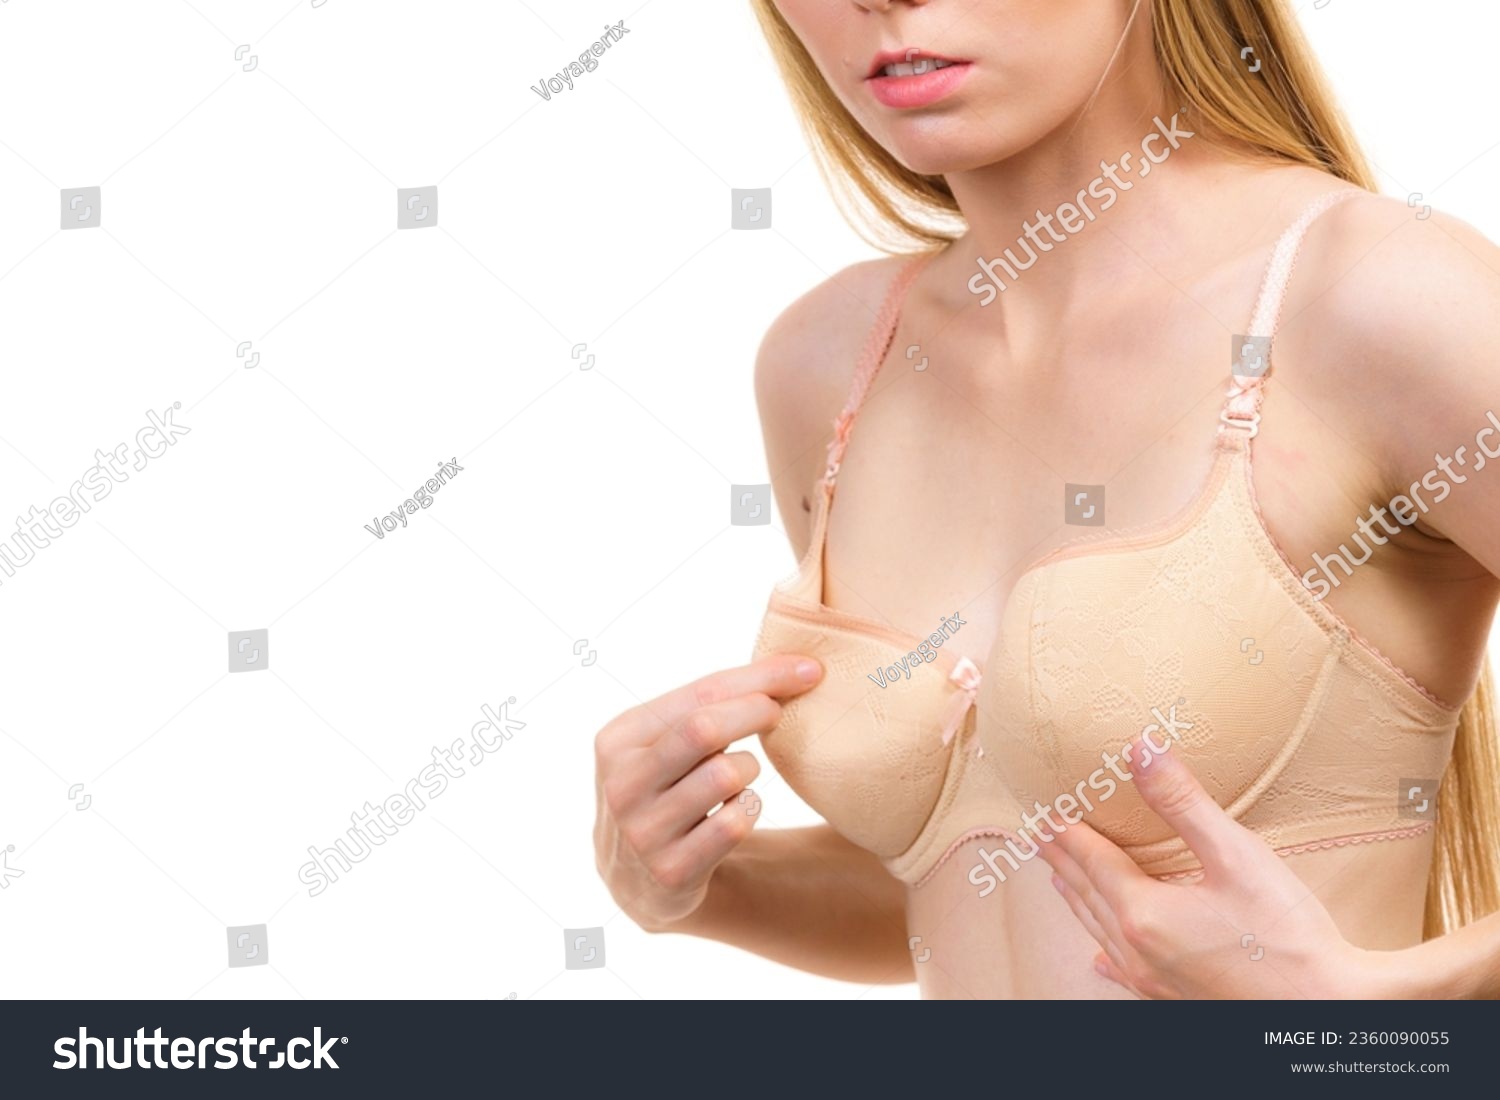 ariel negron add photo chubby small boobs